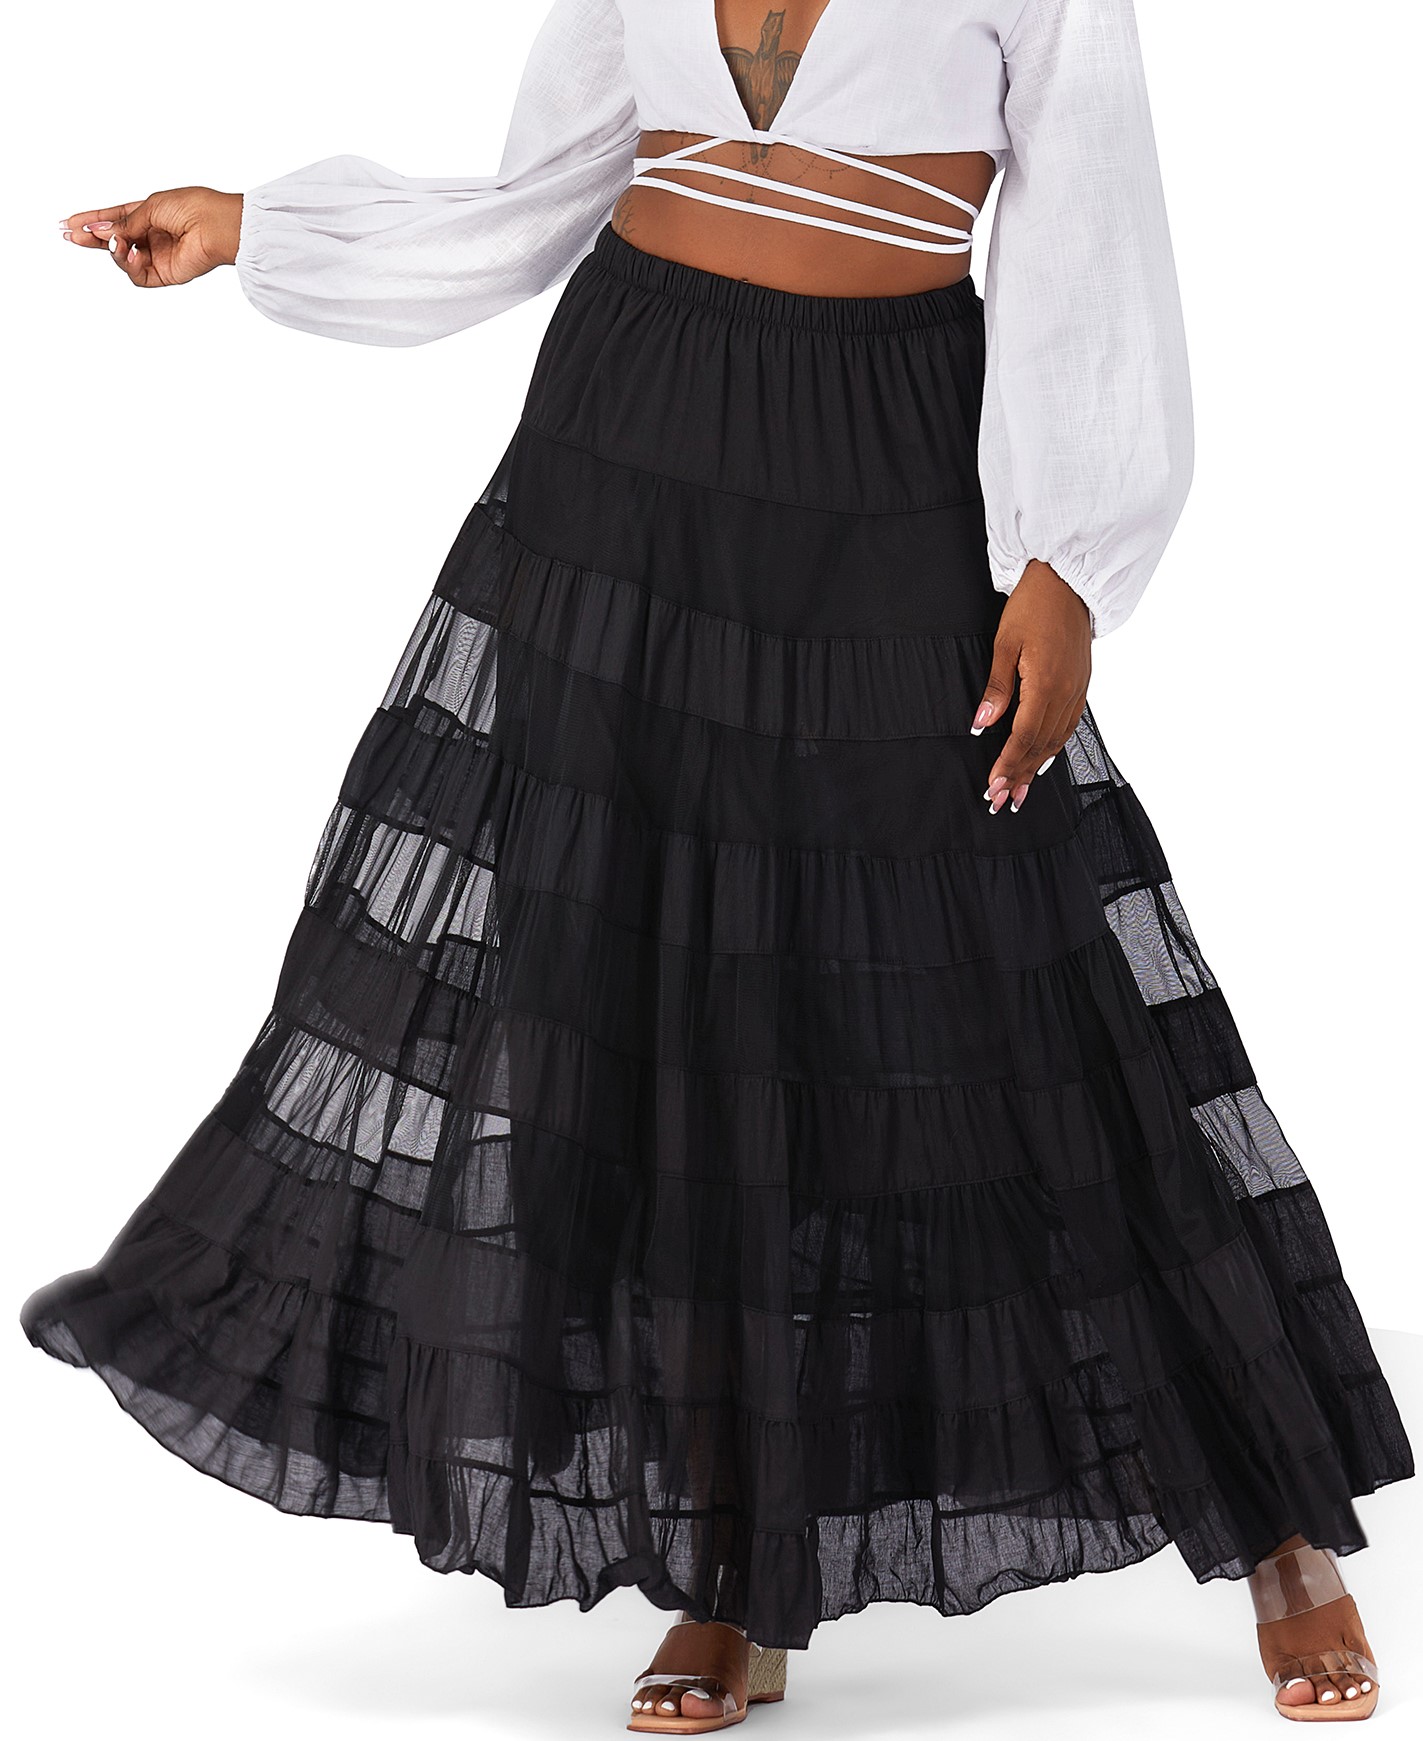 Fsqjgq Skirts for Women Elegant Pleated Skirts for Women Ruched Wrap ...